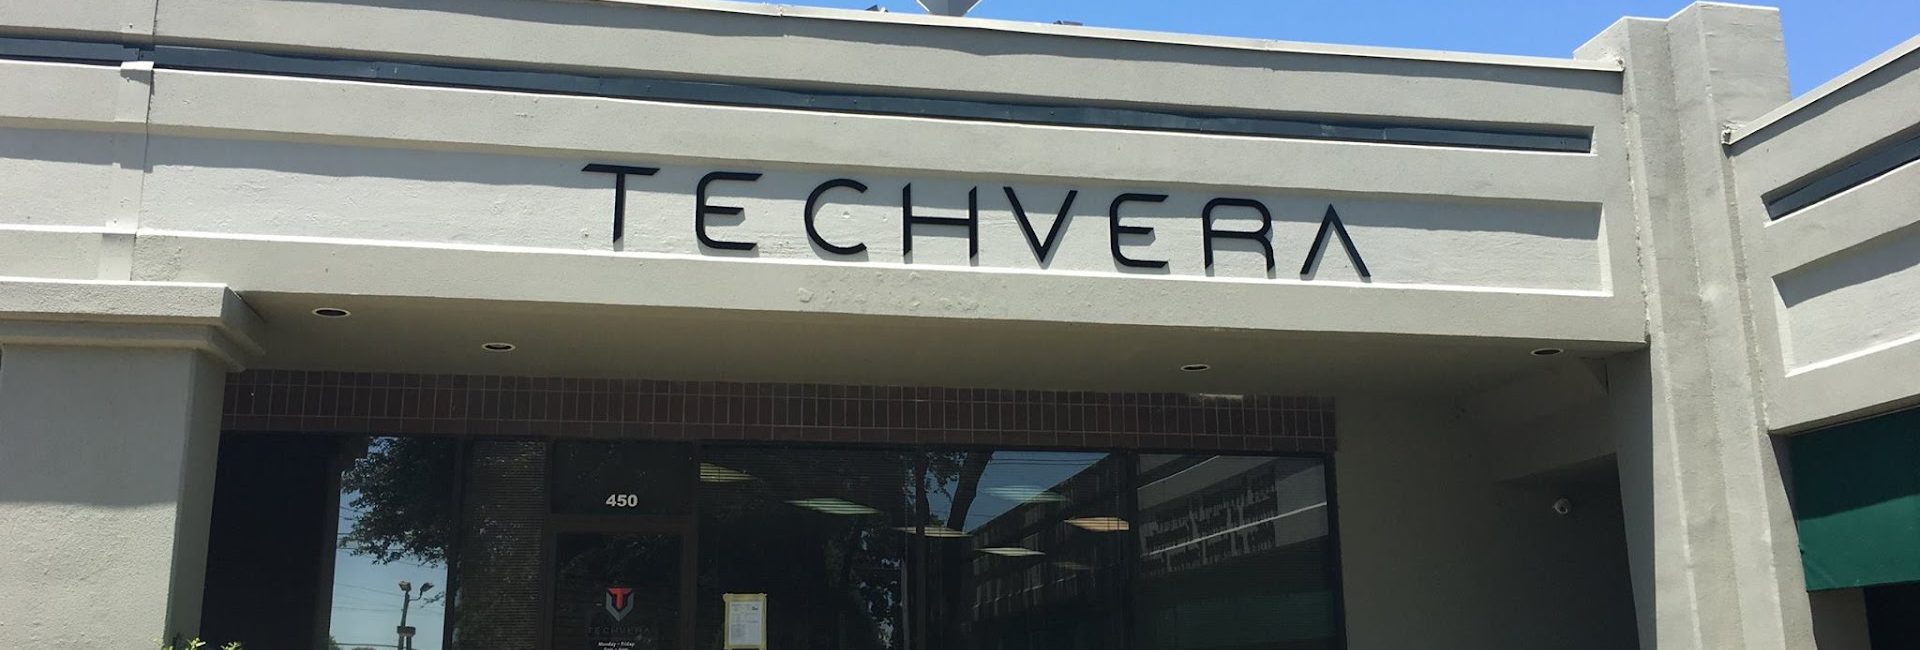 Techvera, an Electric company 5